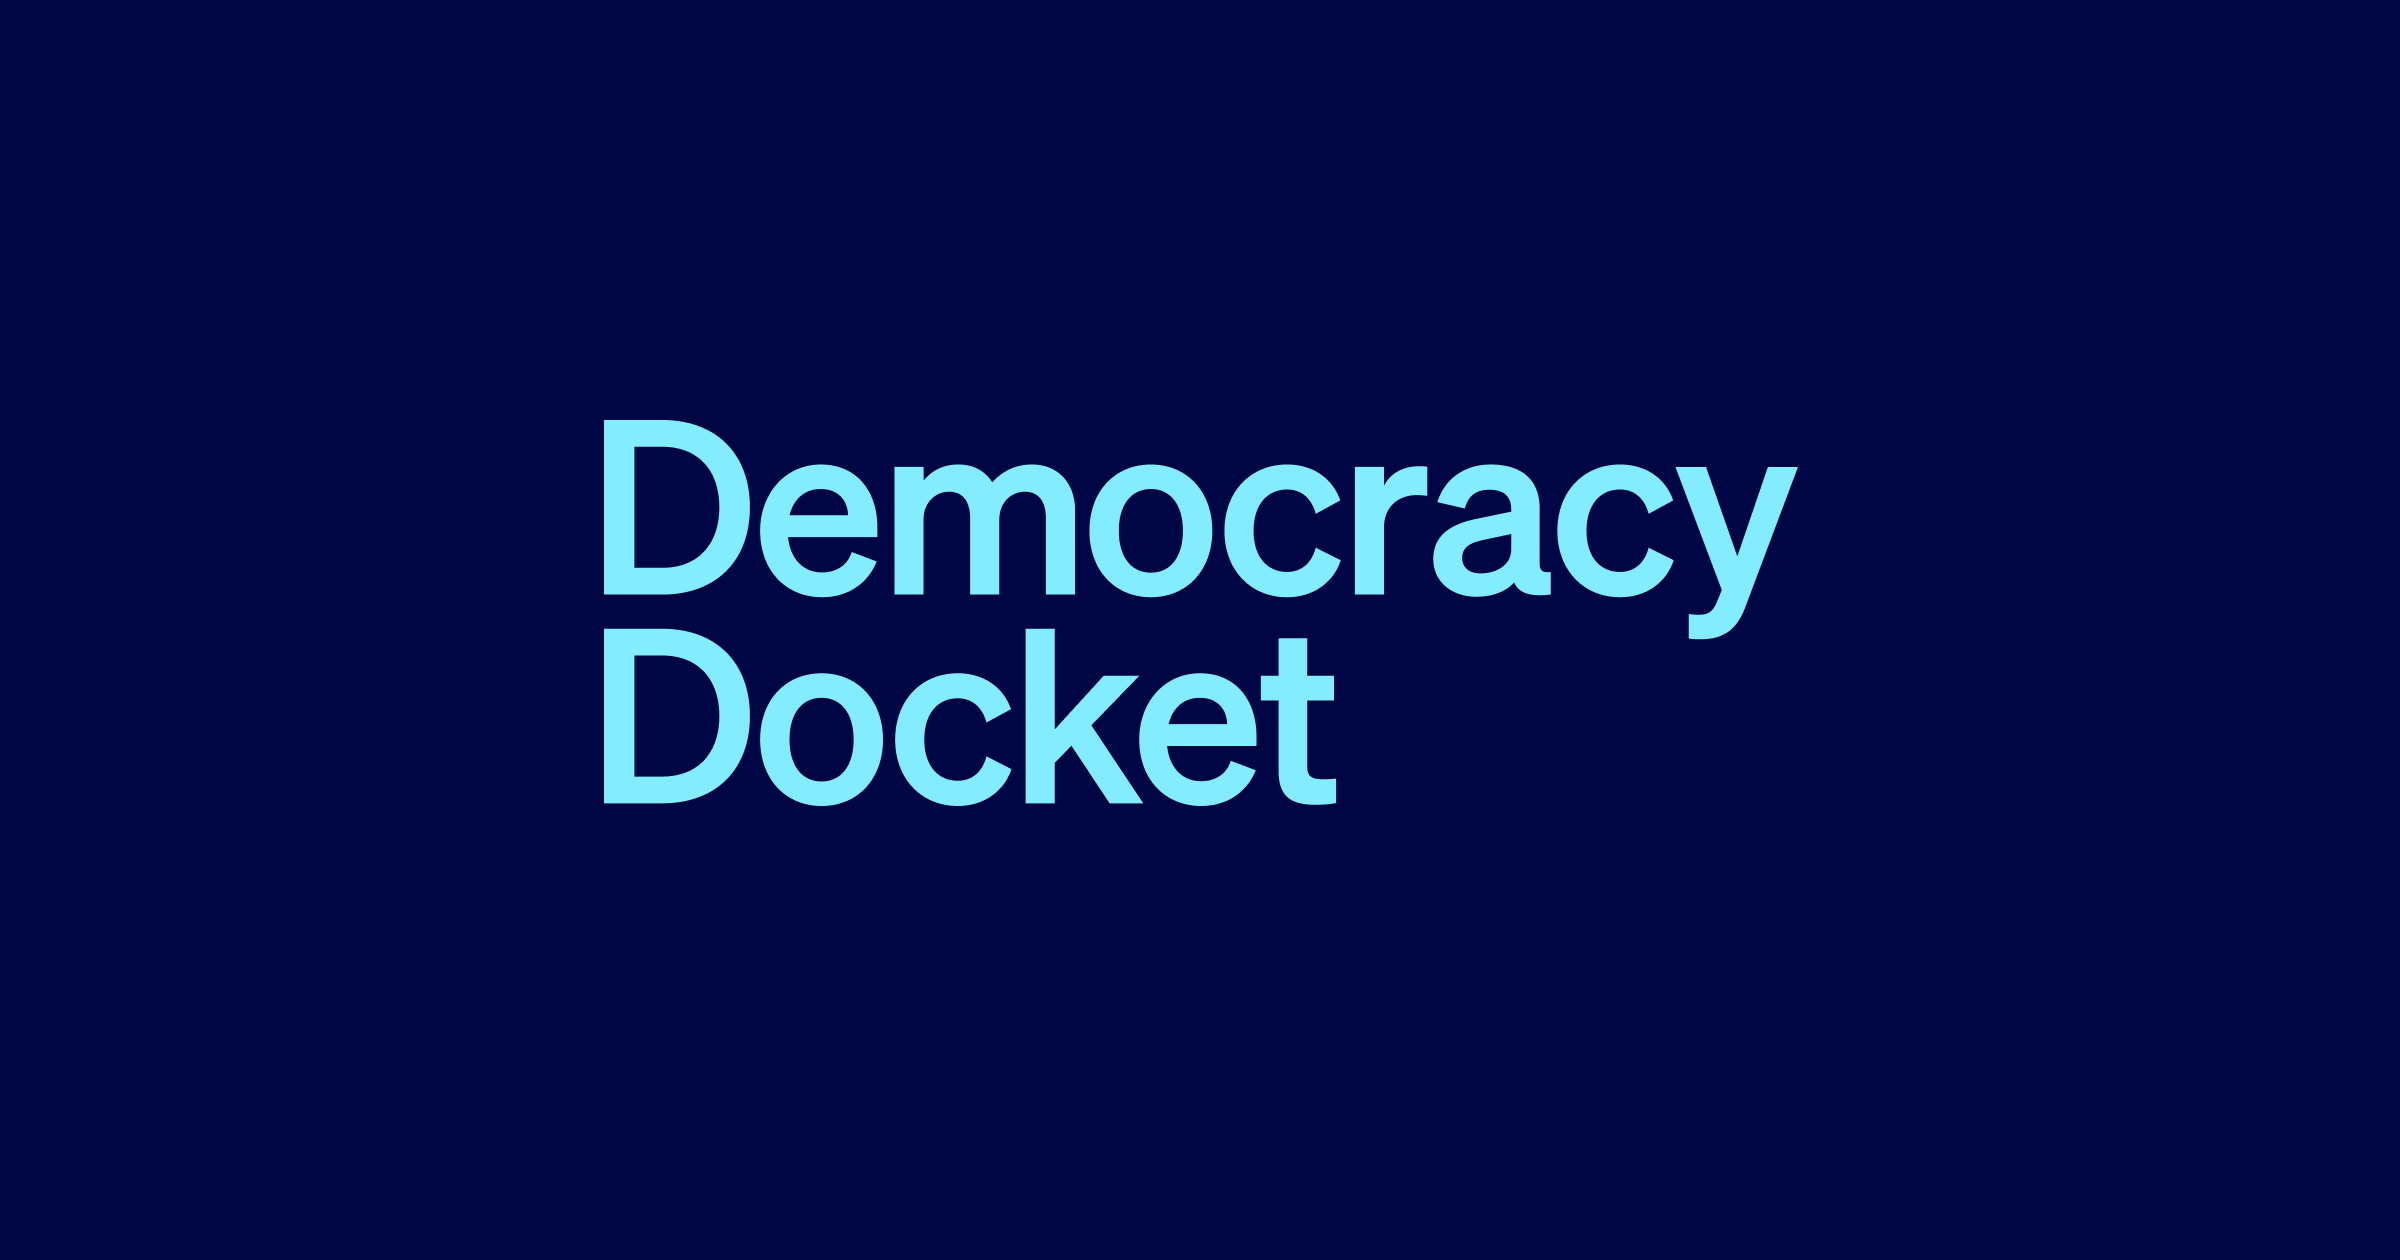 www.democracydocket.com